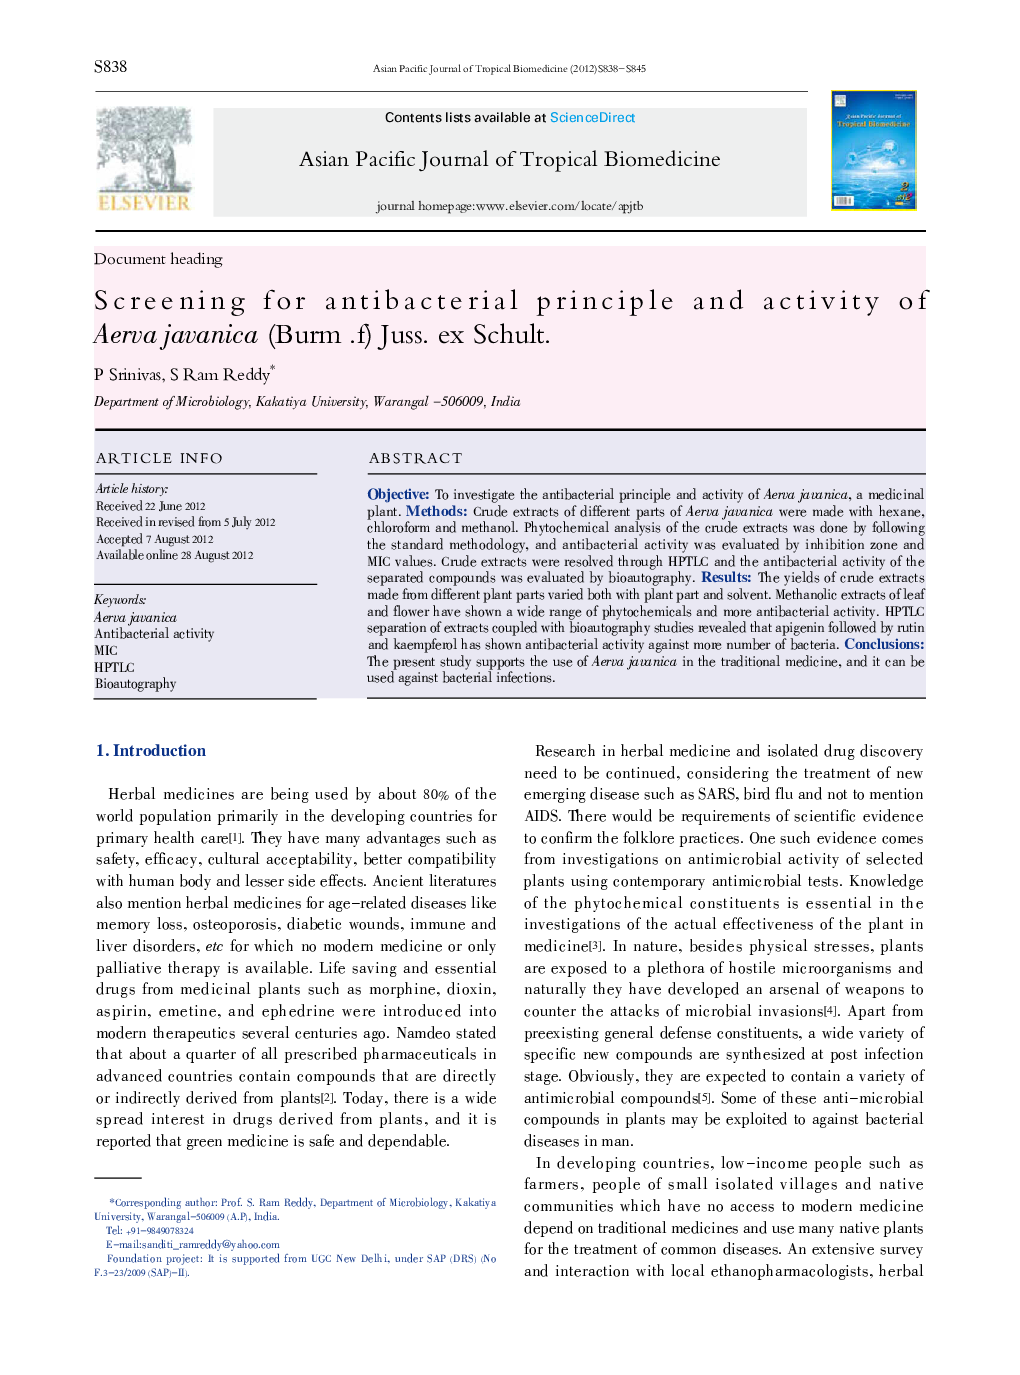 Screening for antibacterial principle and activity of Aerva javanica (Burm .f) Juss. ex Schult.